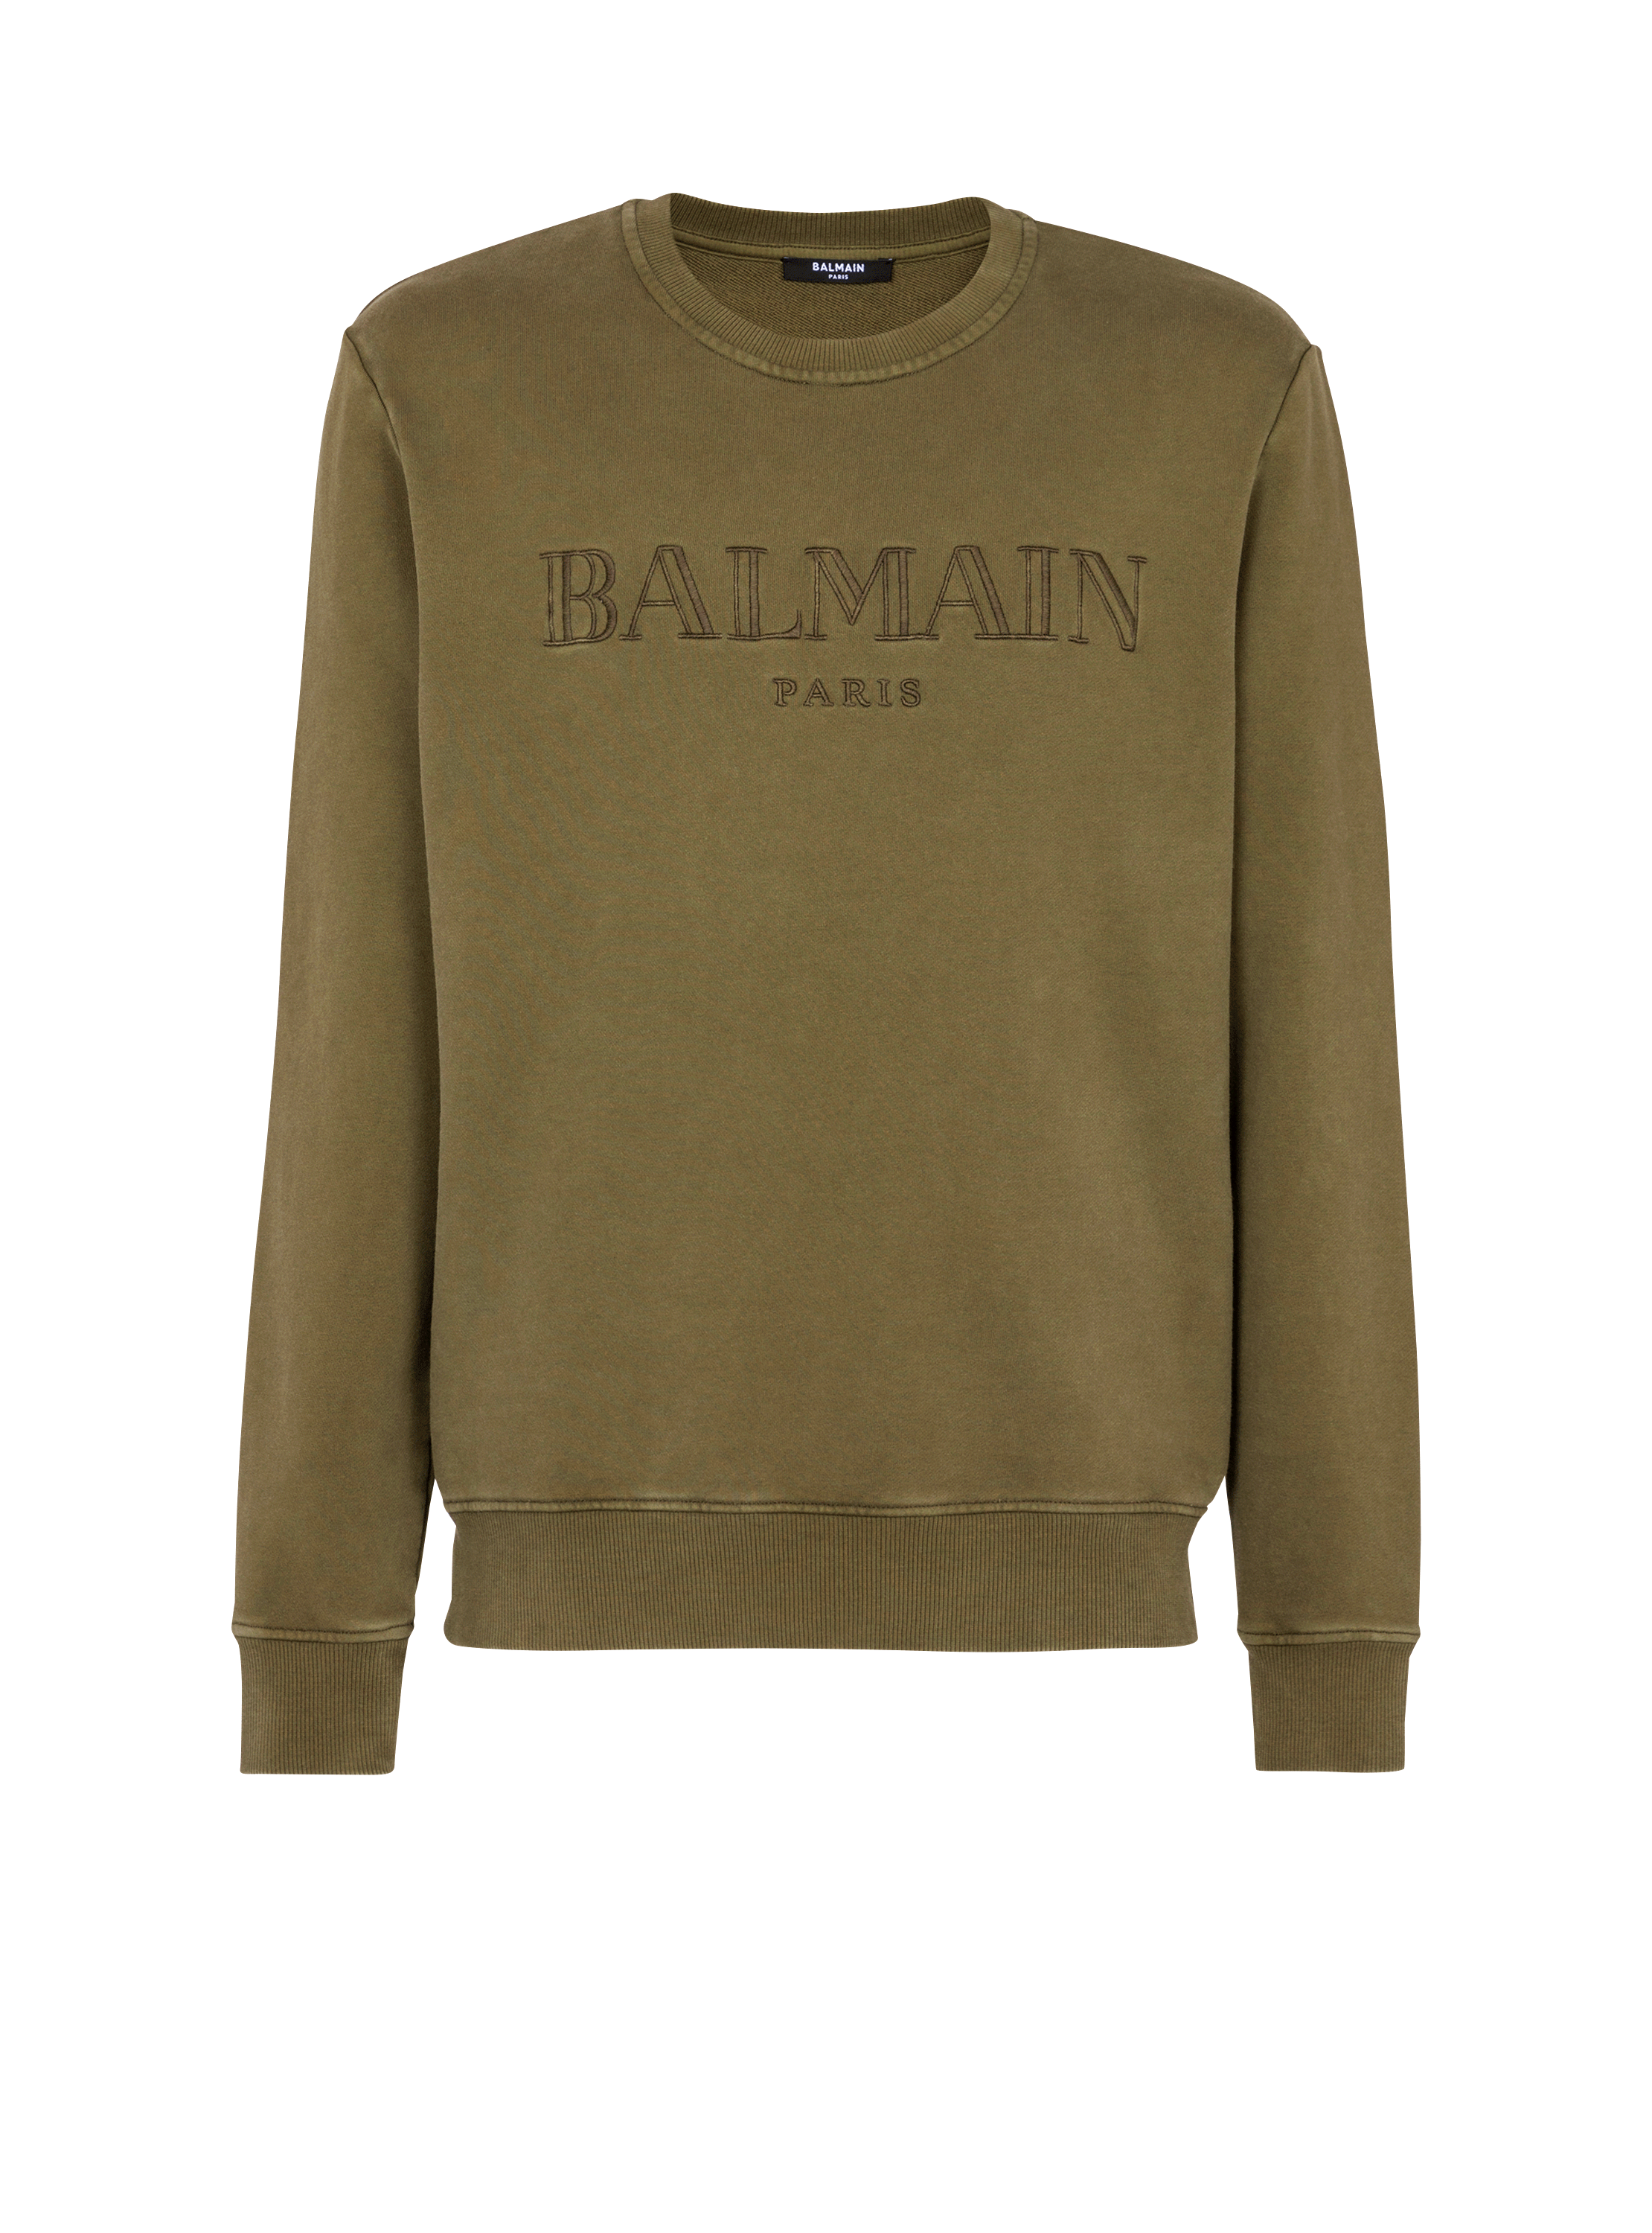 Vintage Balmain sweatshirt